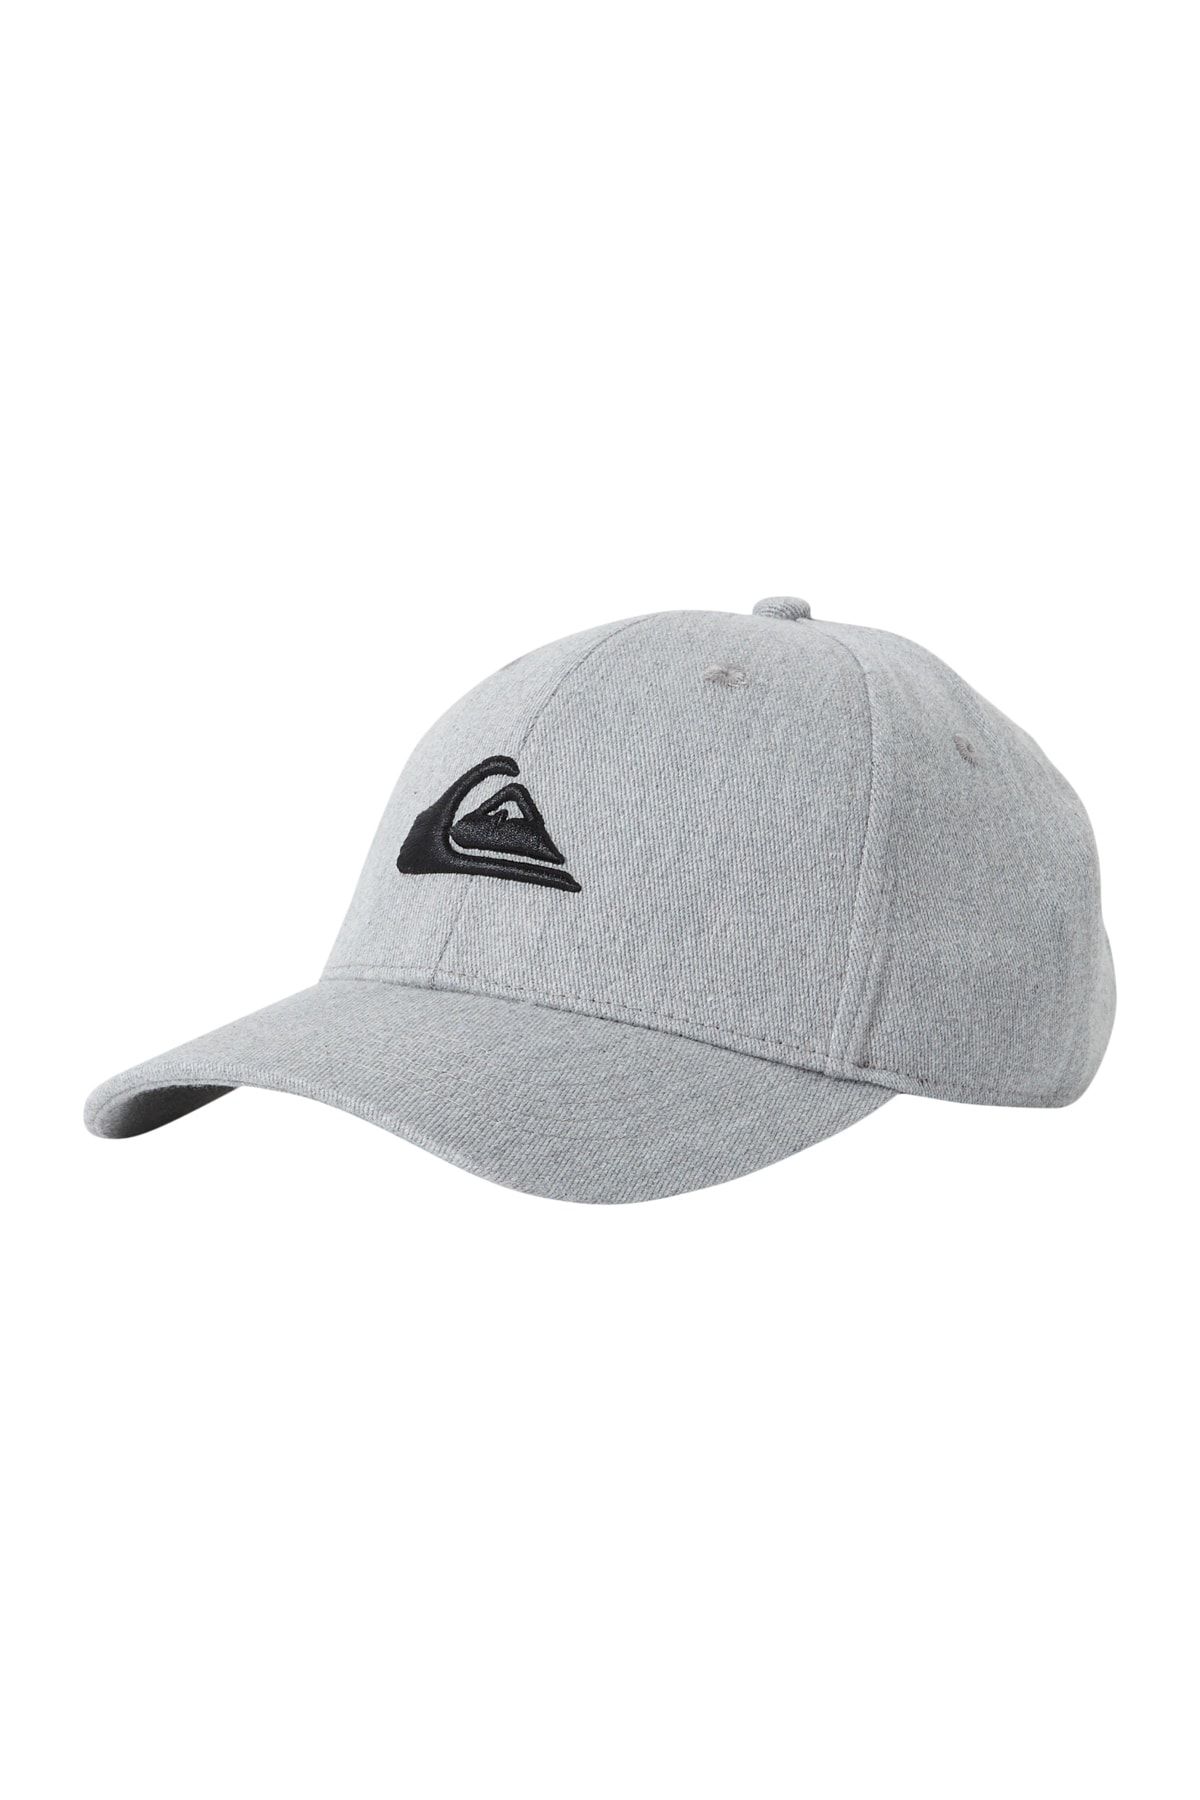 Quiksilver Decades Snapback Hdwr Sgrh - Trendyol Hat